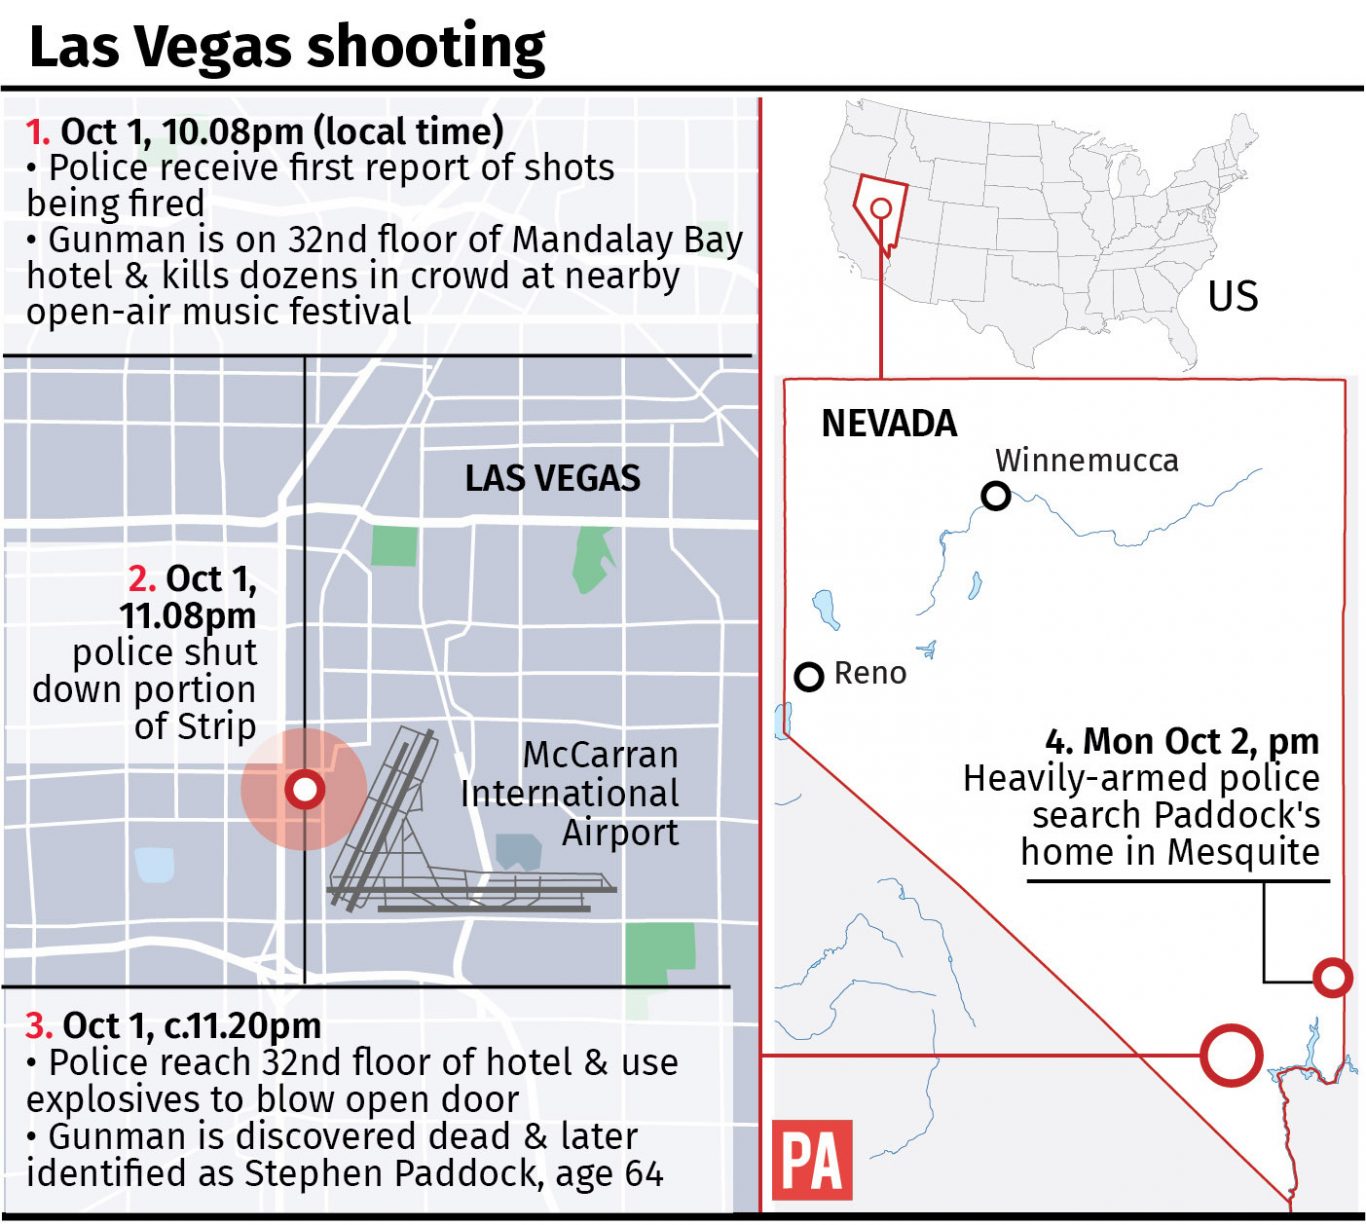 Las Vegas Shooting Summary